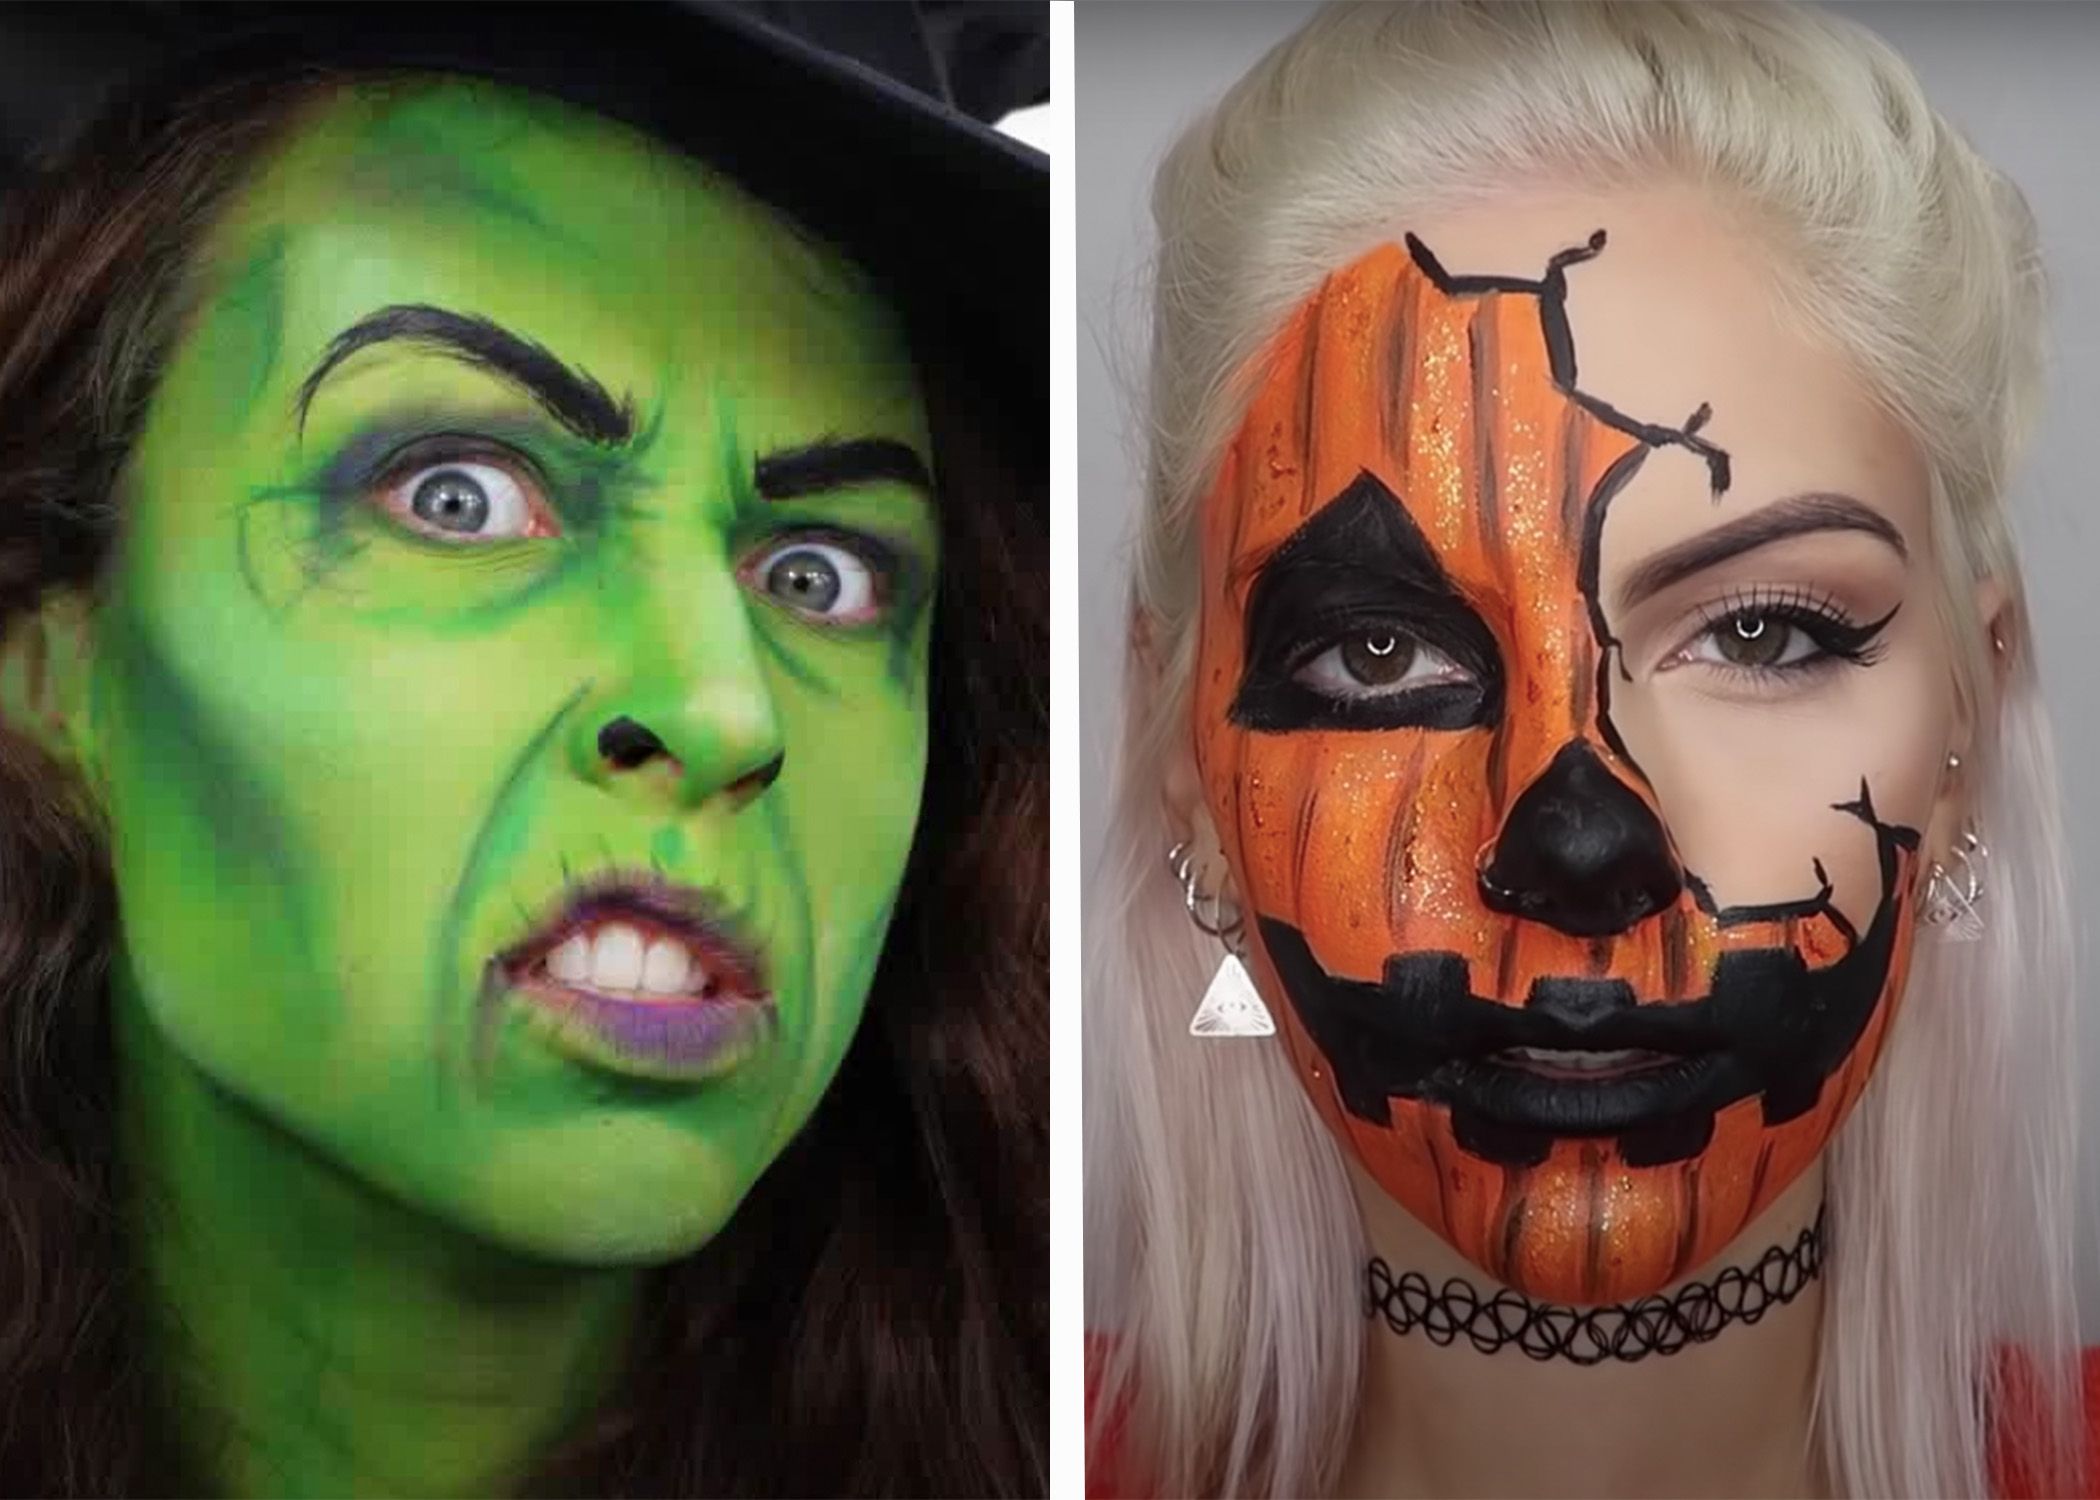 Pumpkin face paint: easy Halloween face painting ideas for kids